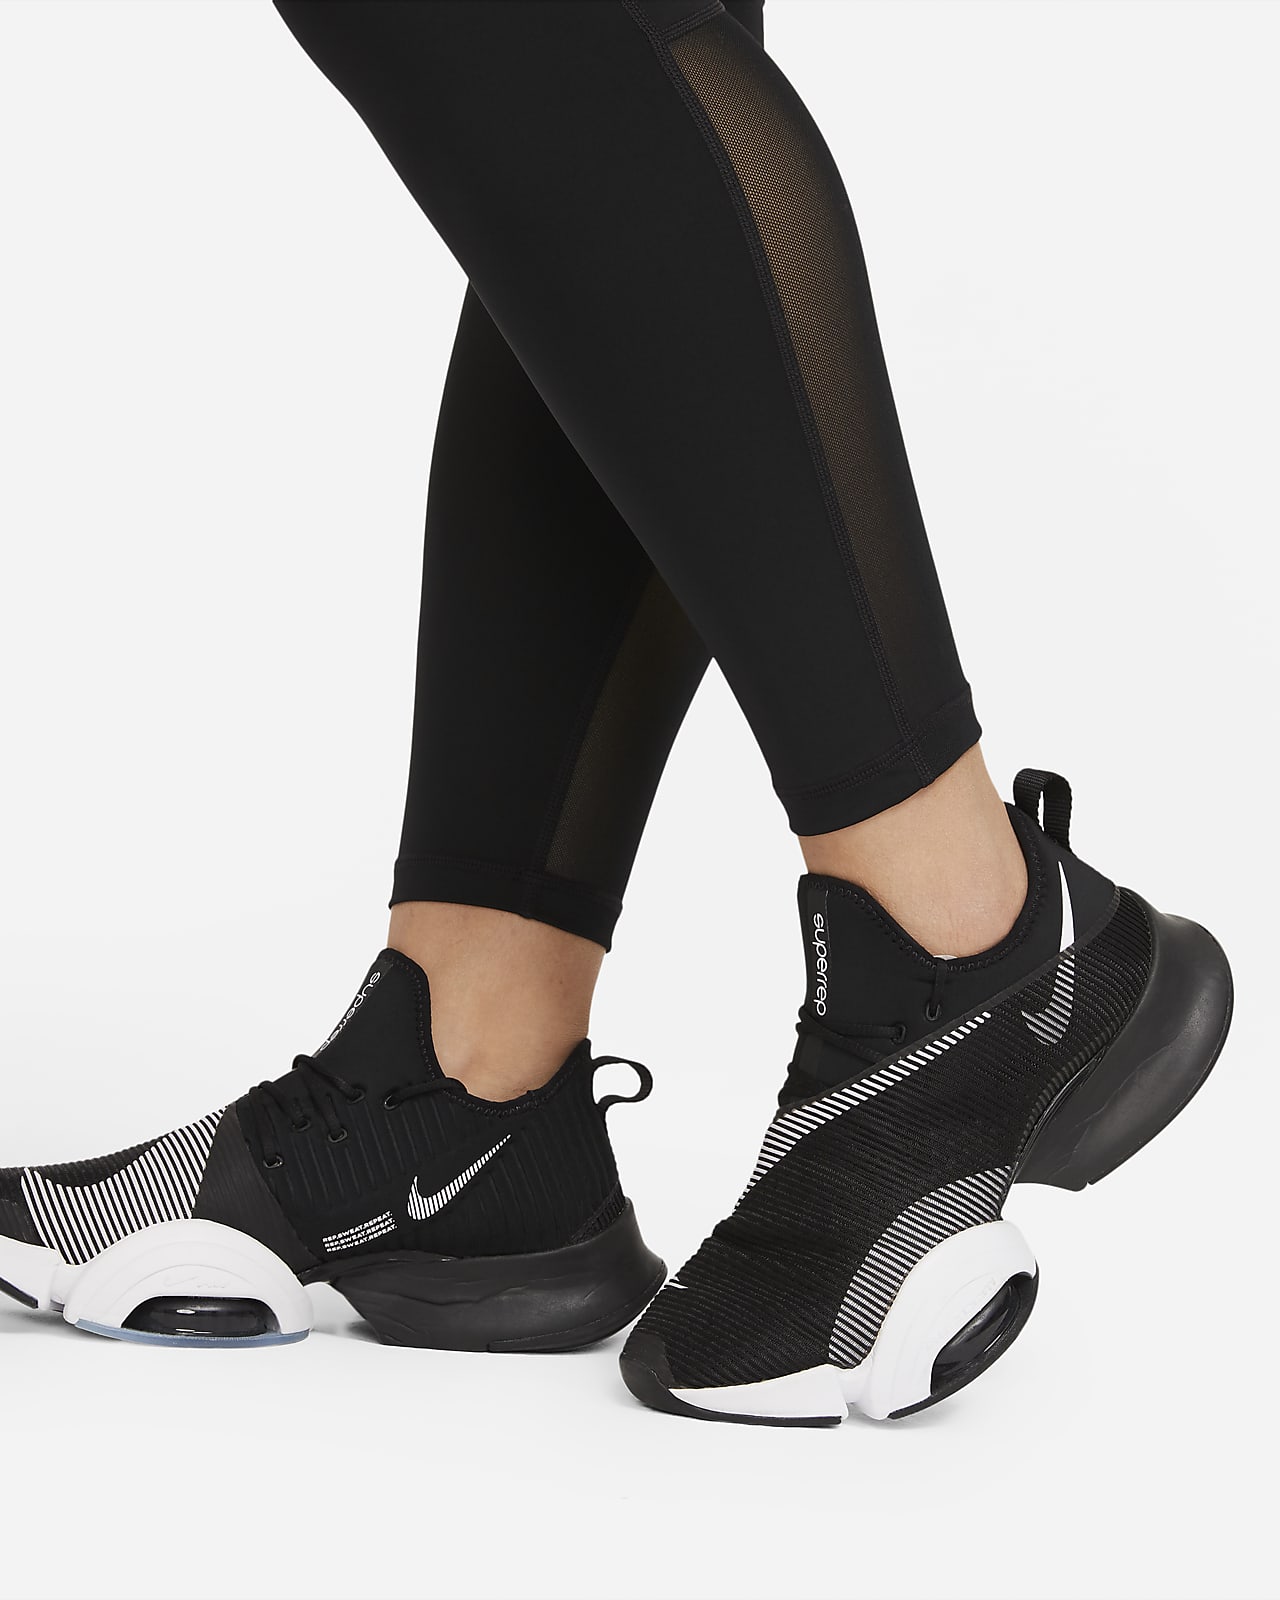 Nike Pro Training Plus 365 leggings in marl grey